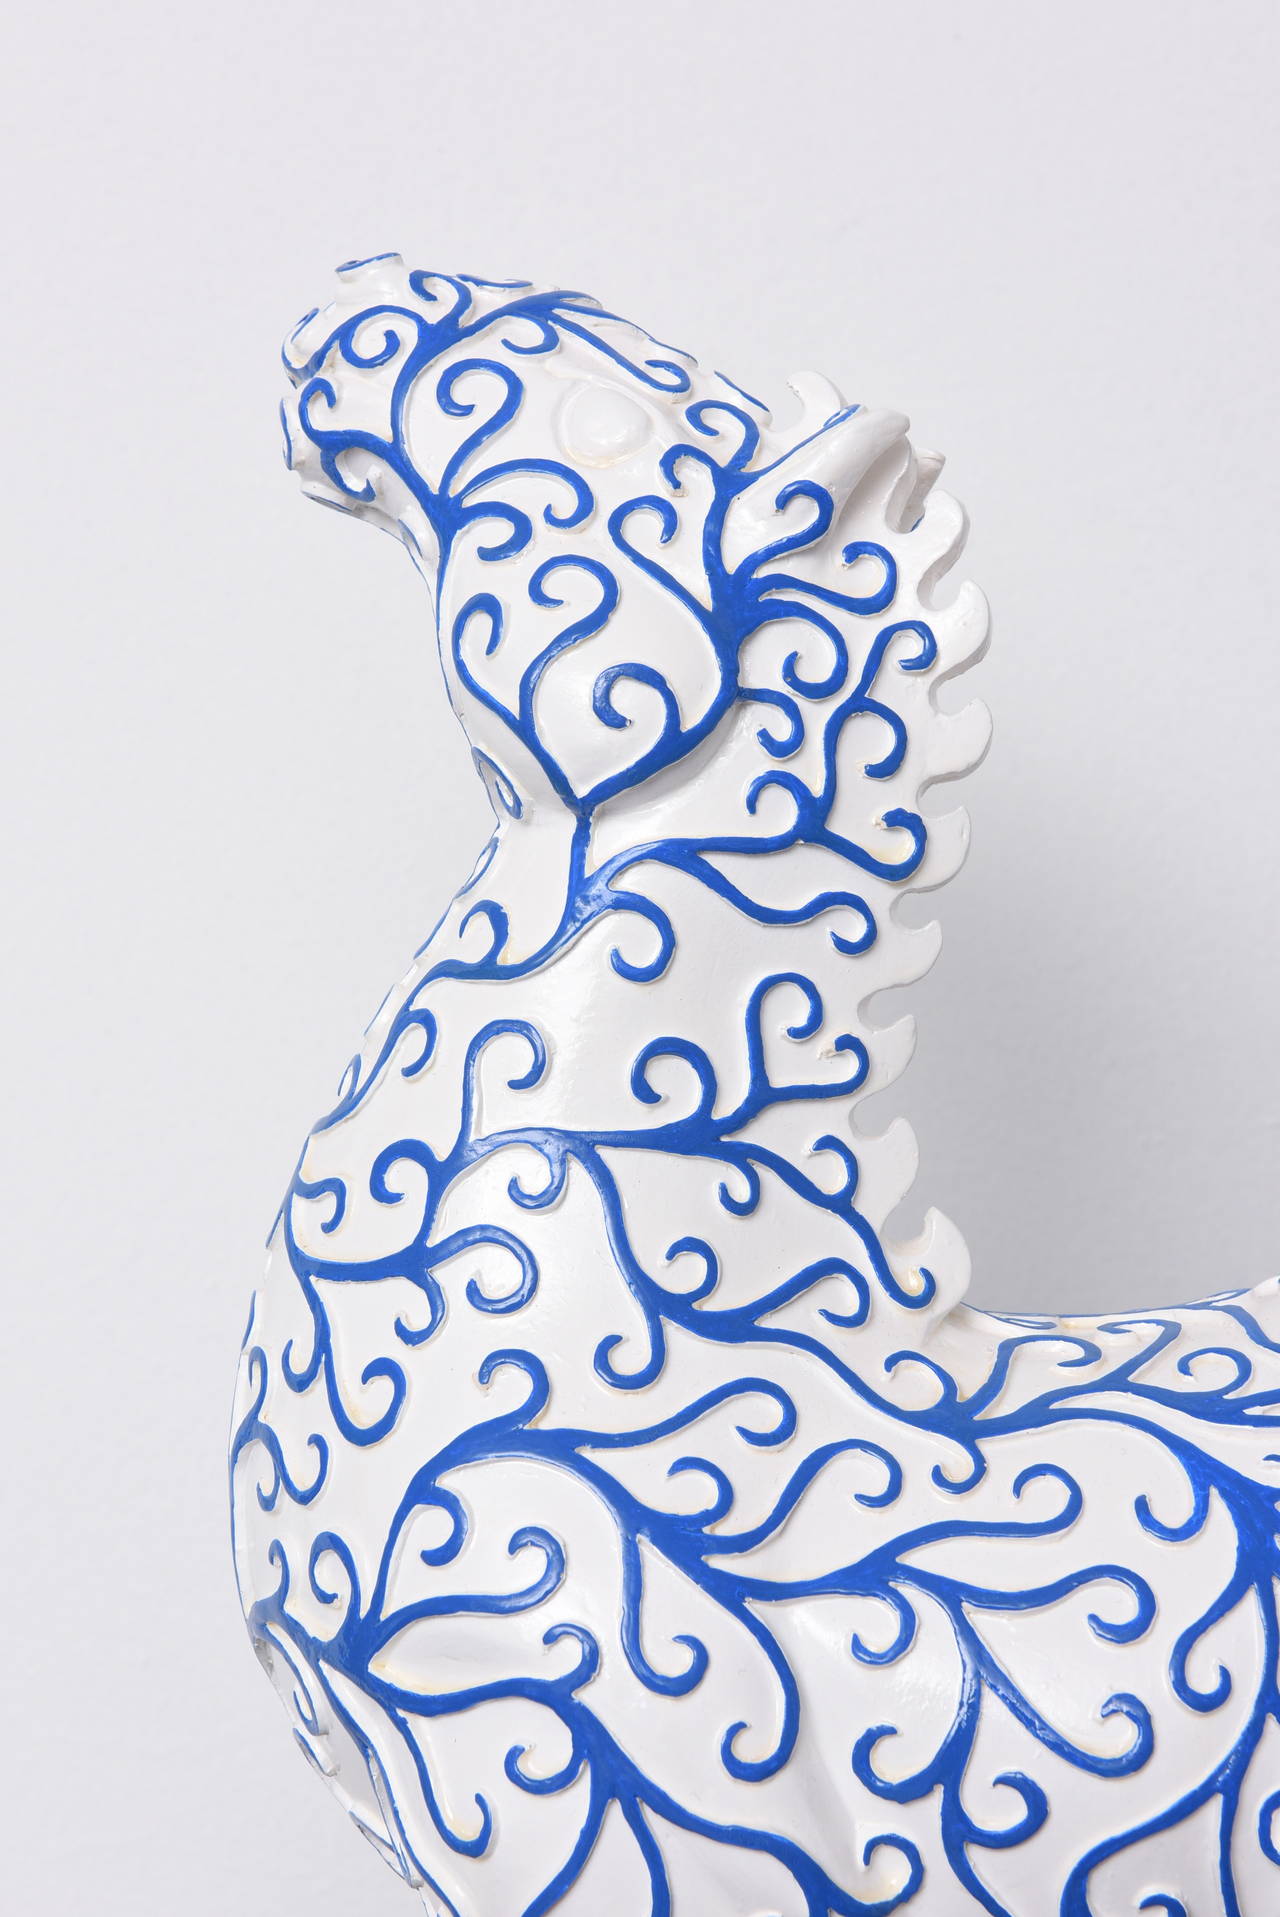 Arabesques Horse - Blue & White Resin sculpture For Sale 5